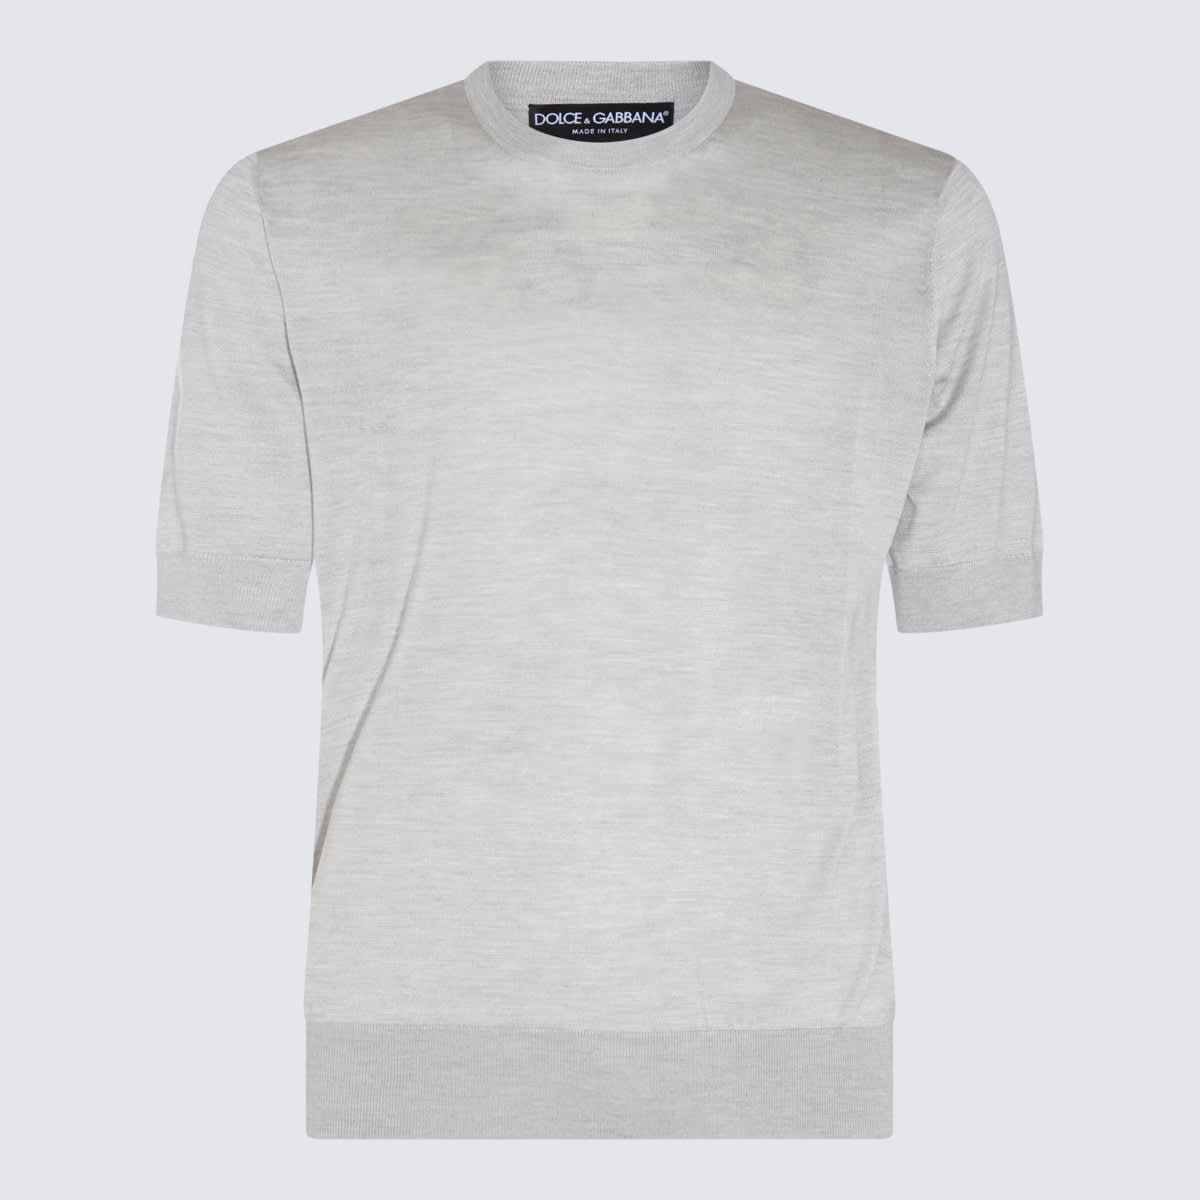 Dolce & Gabbana Light Grey Cotton T-shirt